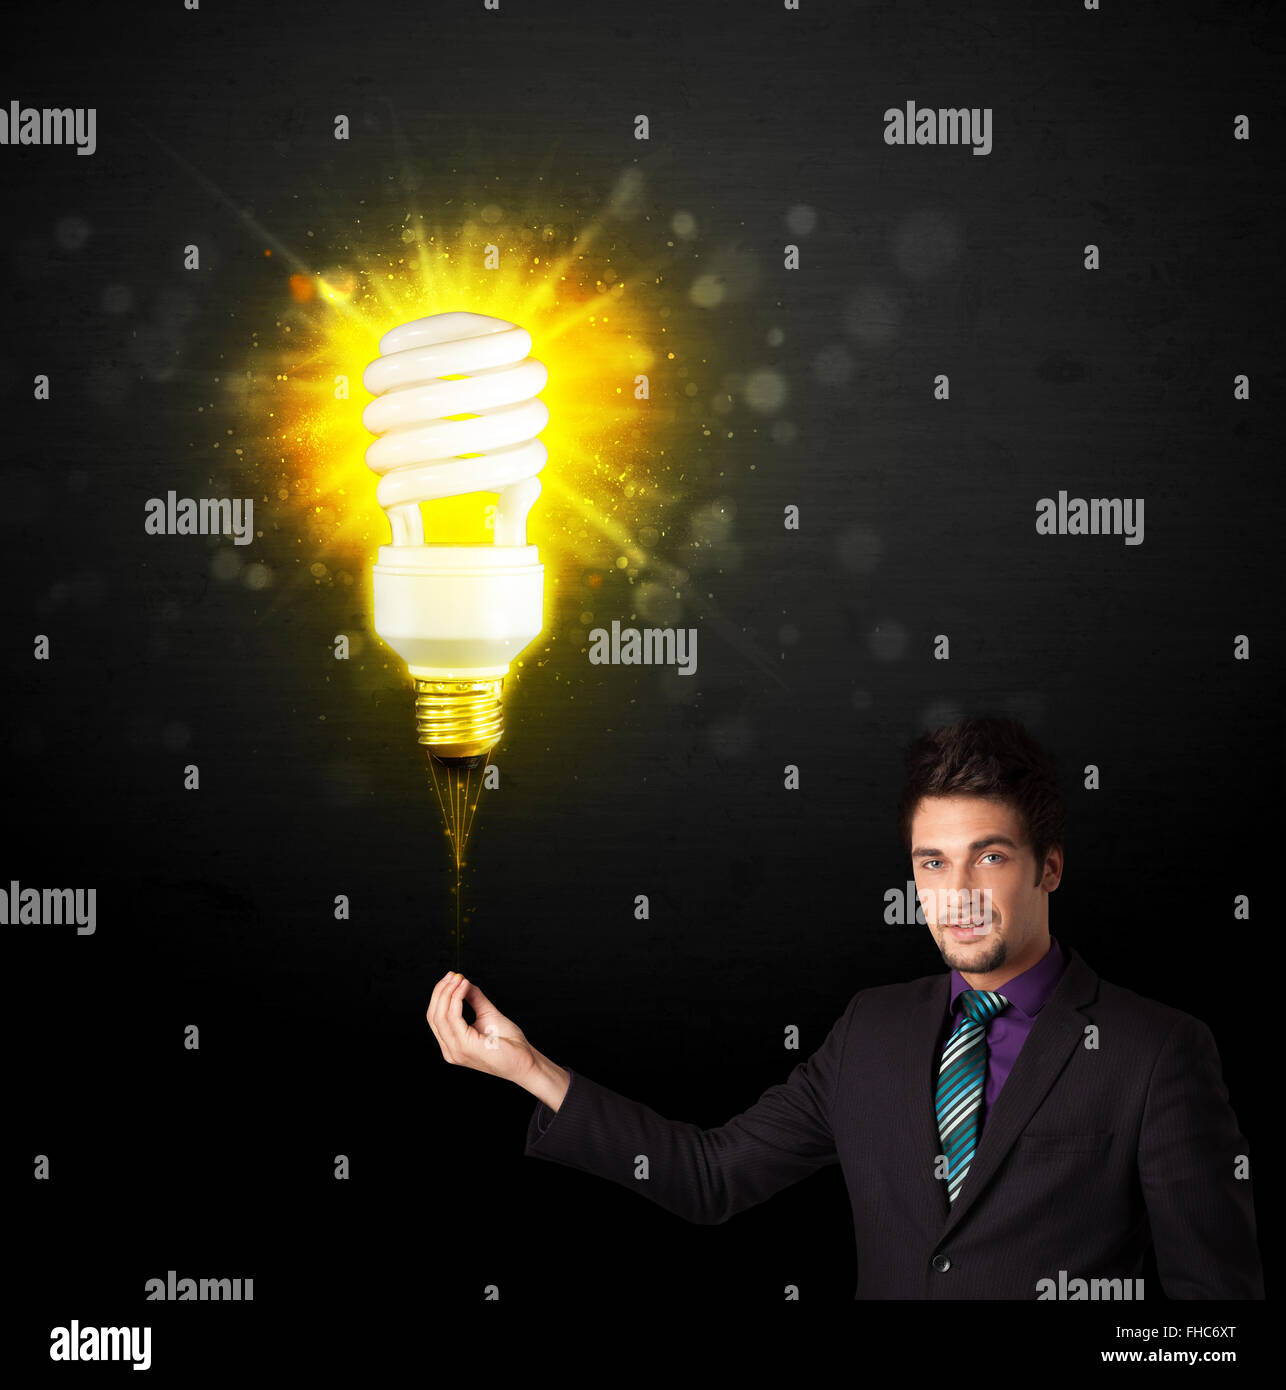 Businessman with an eco-friendly bulb Stock Photo